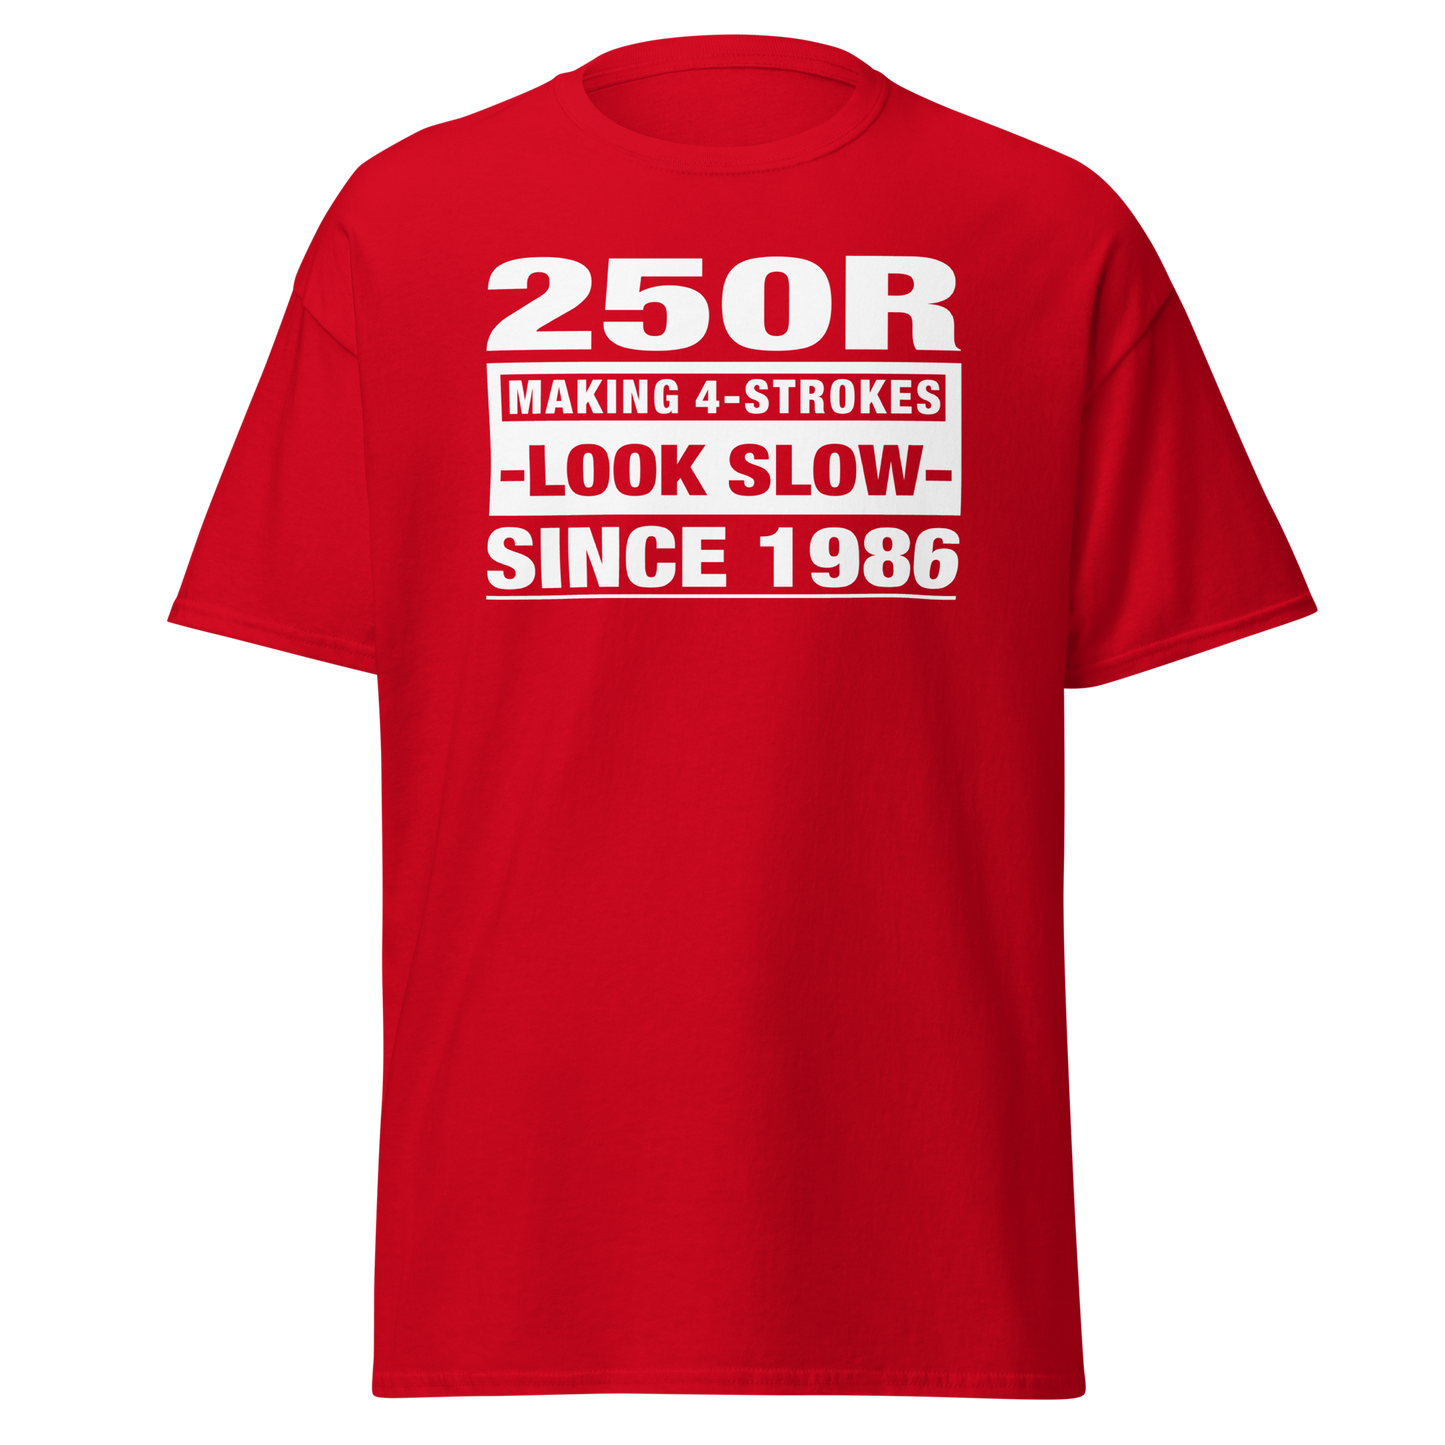 Slow 4-strokes T-shirt